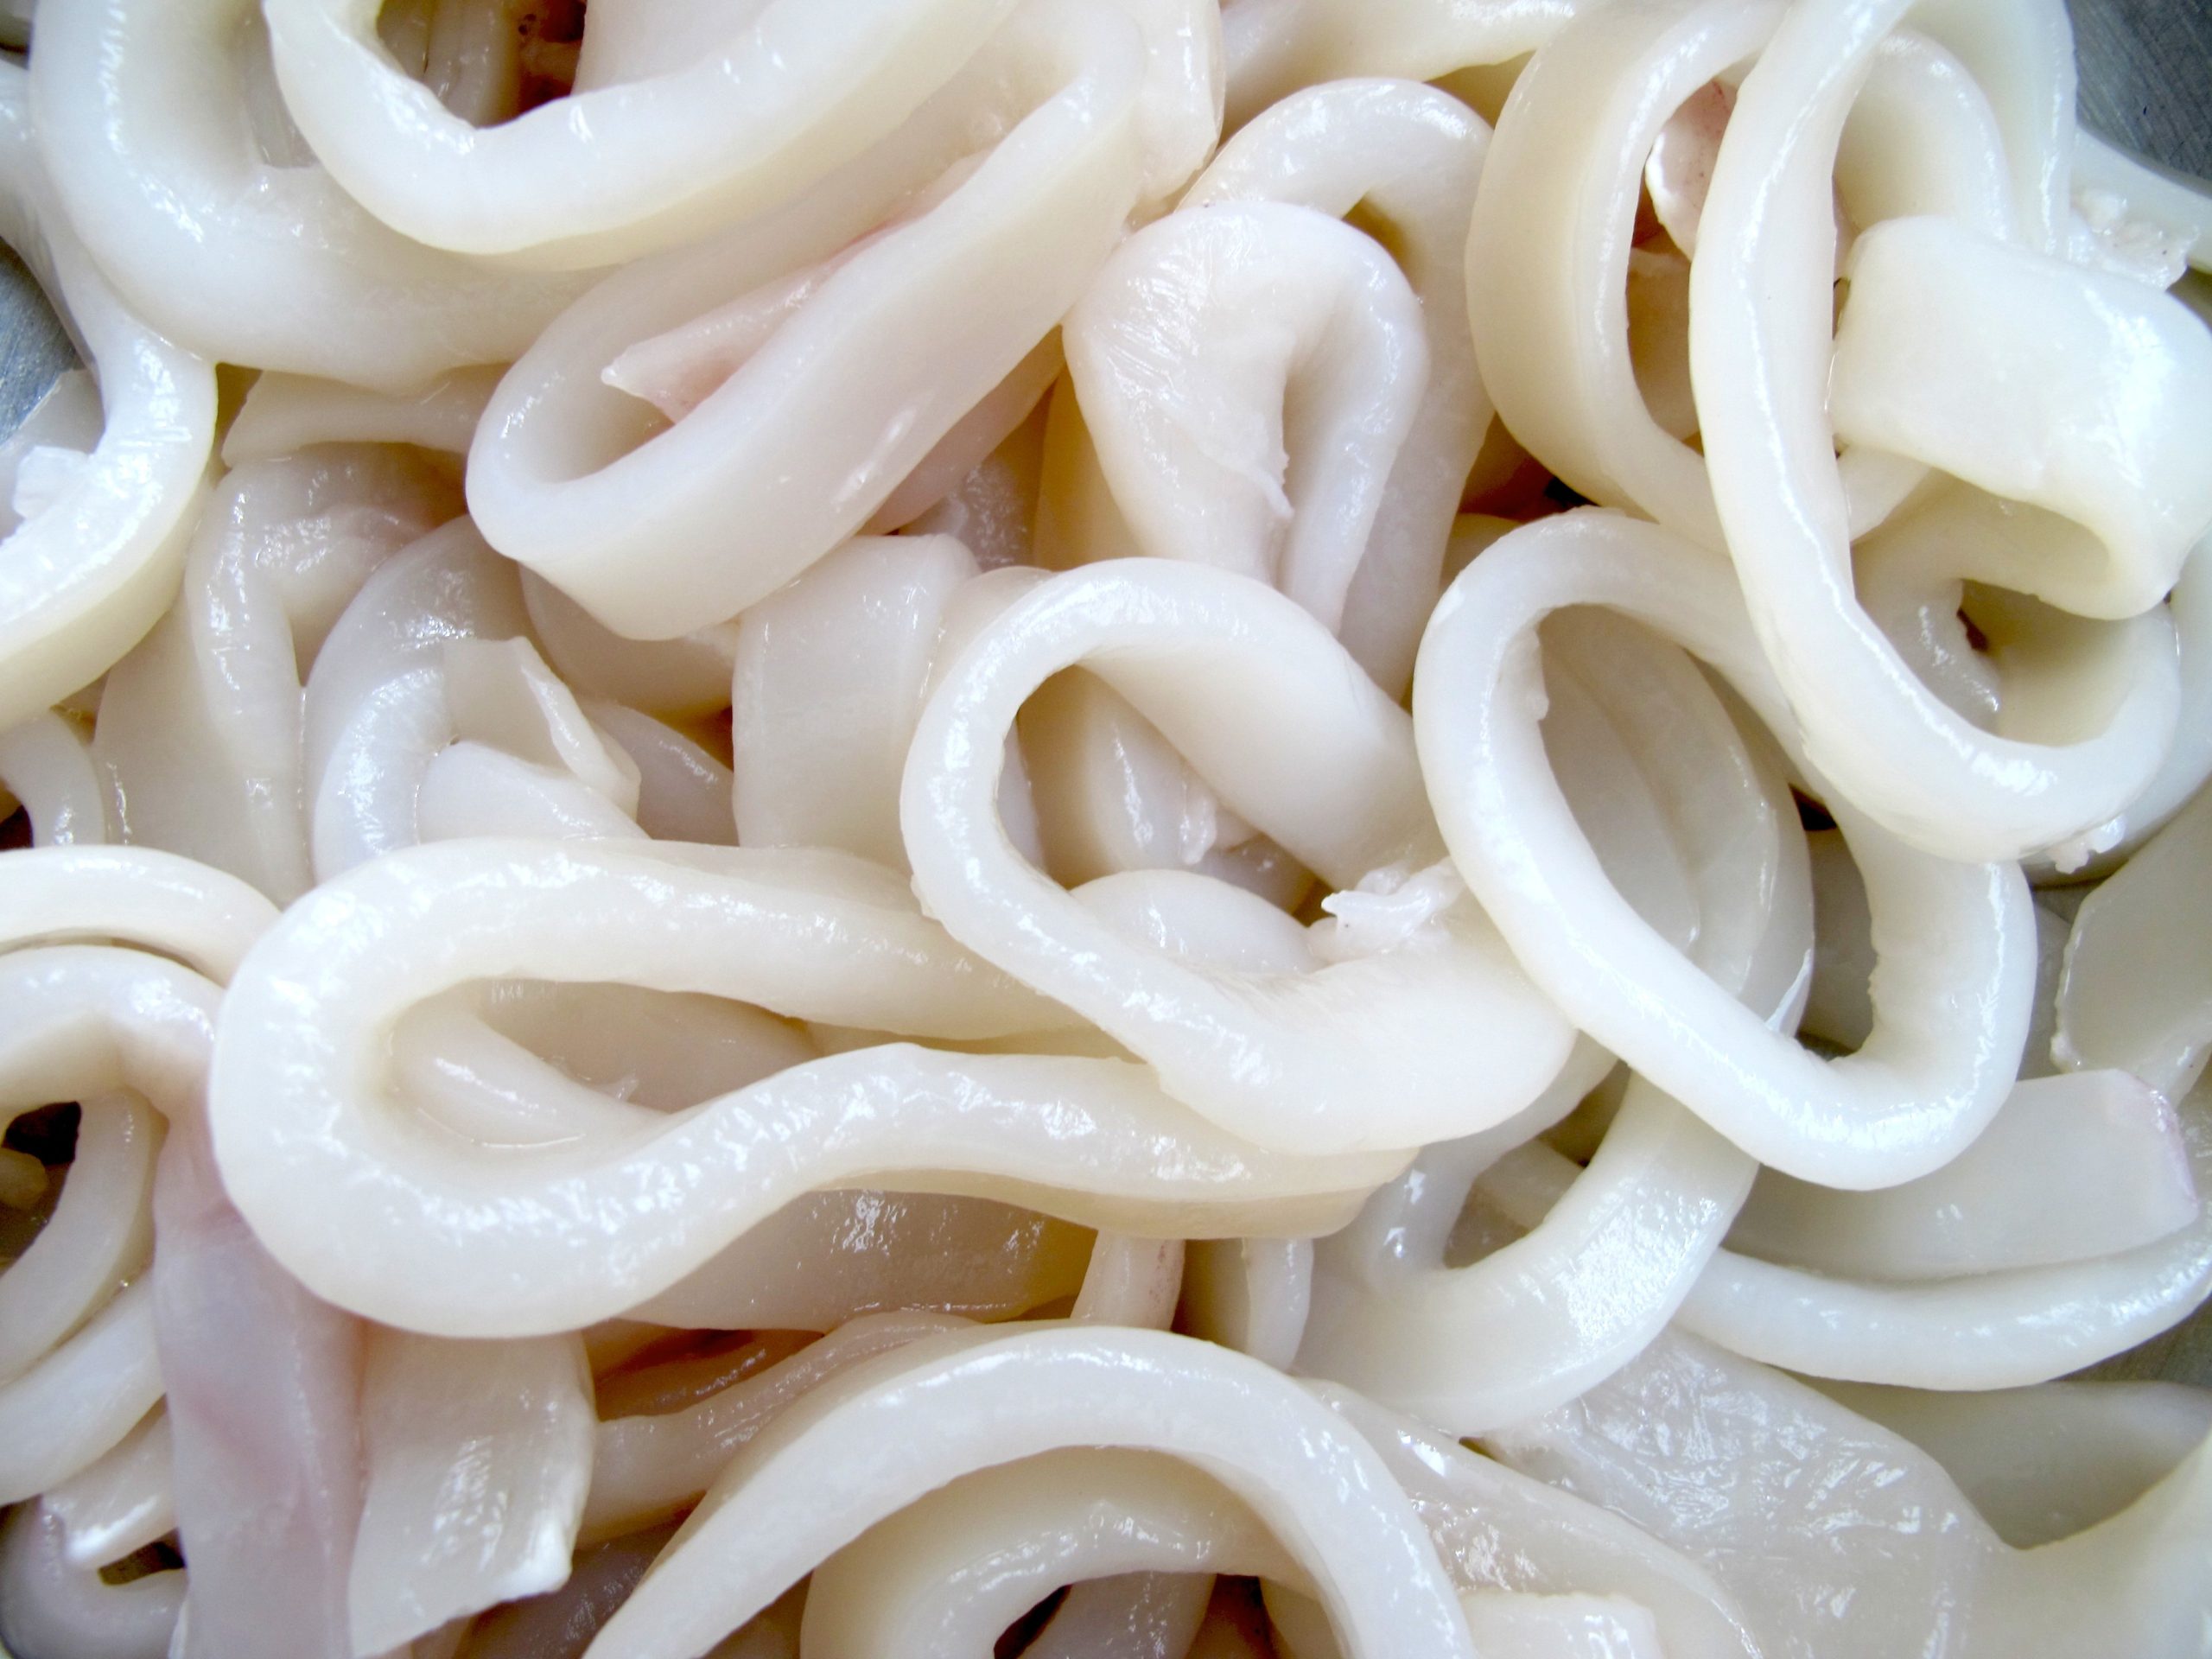 Raw squid rings